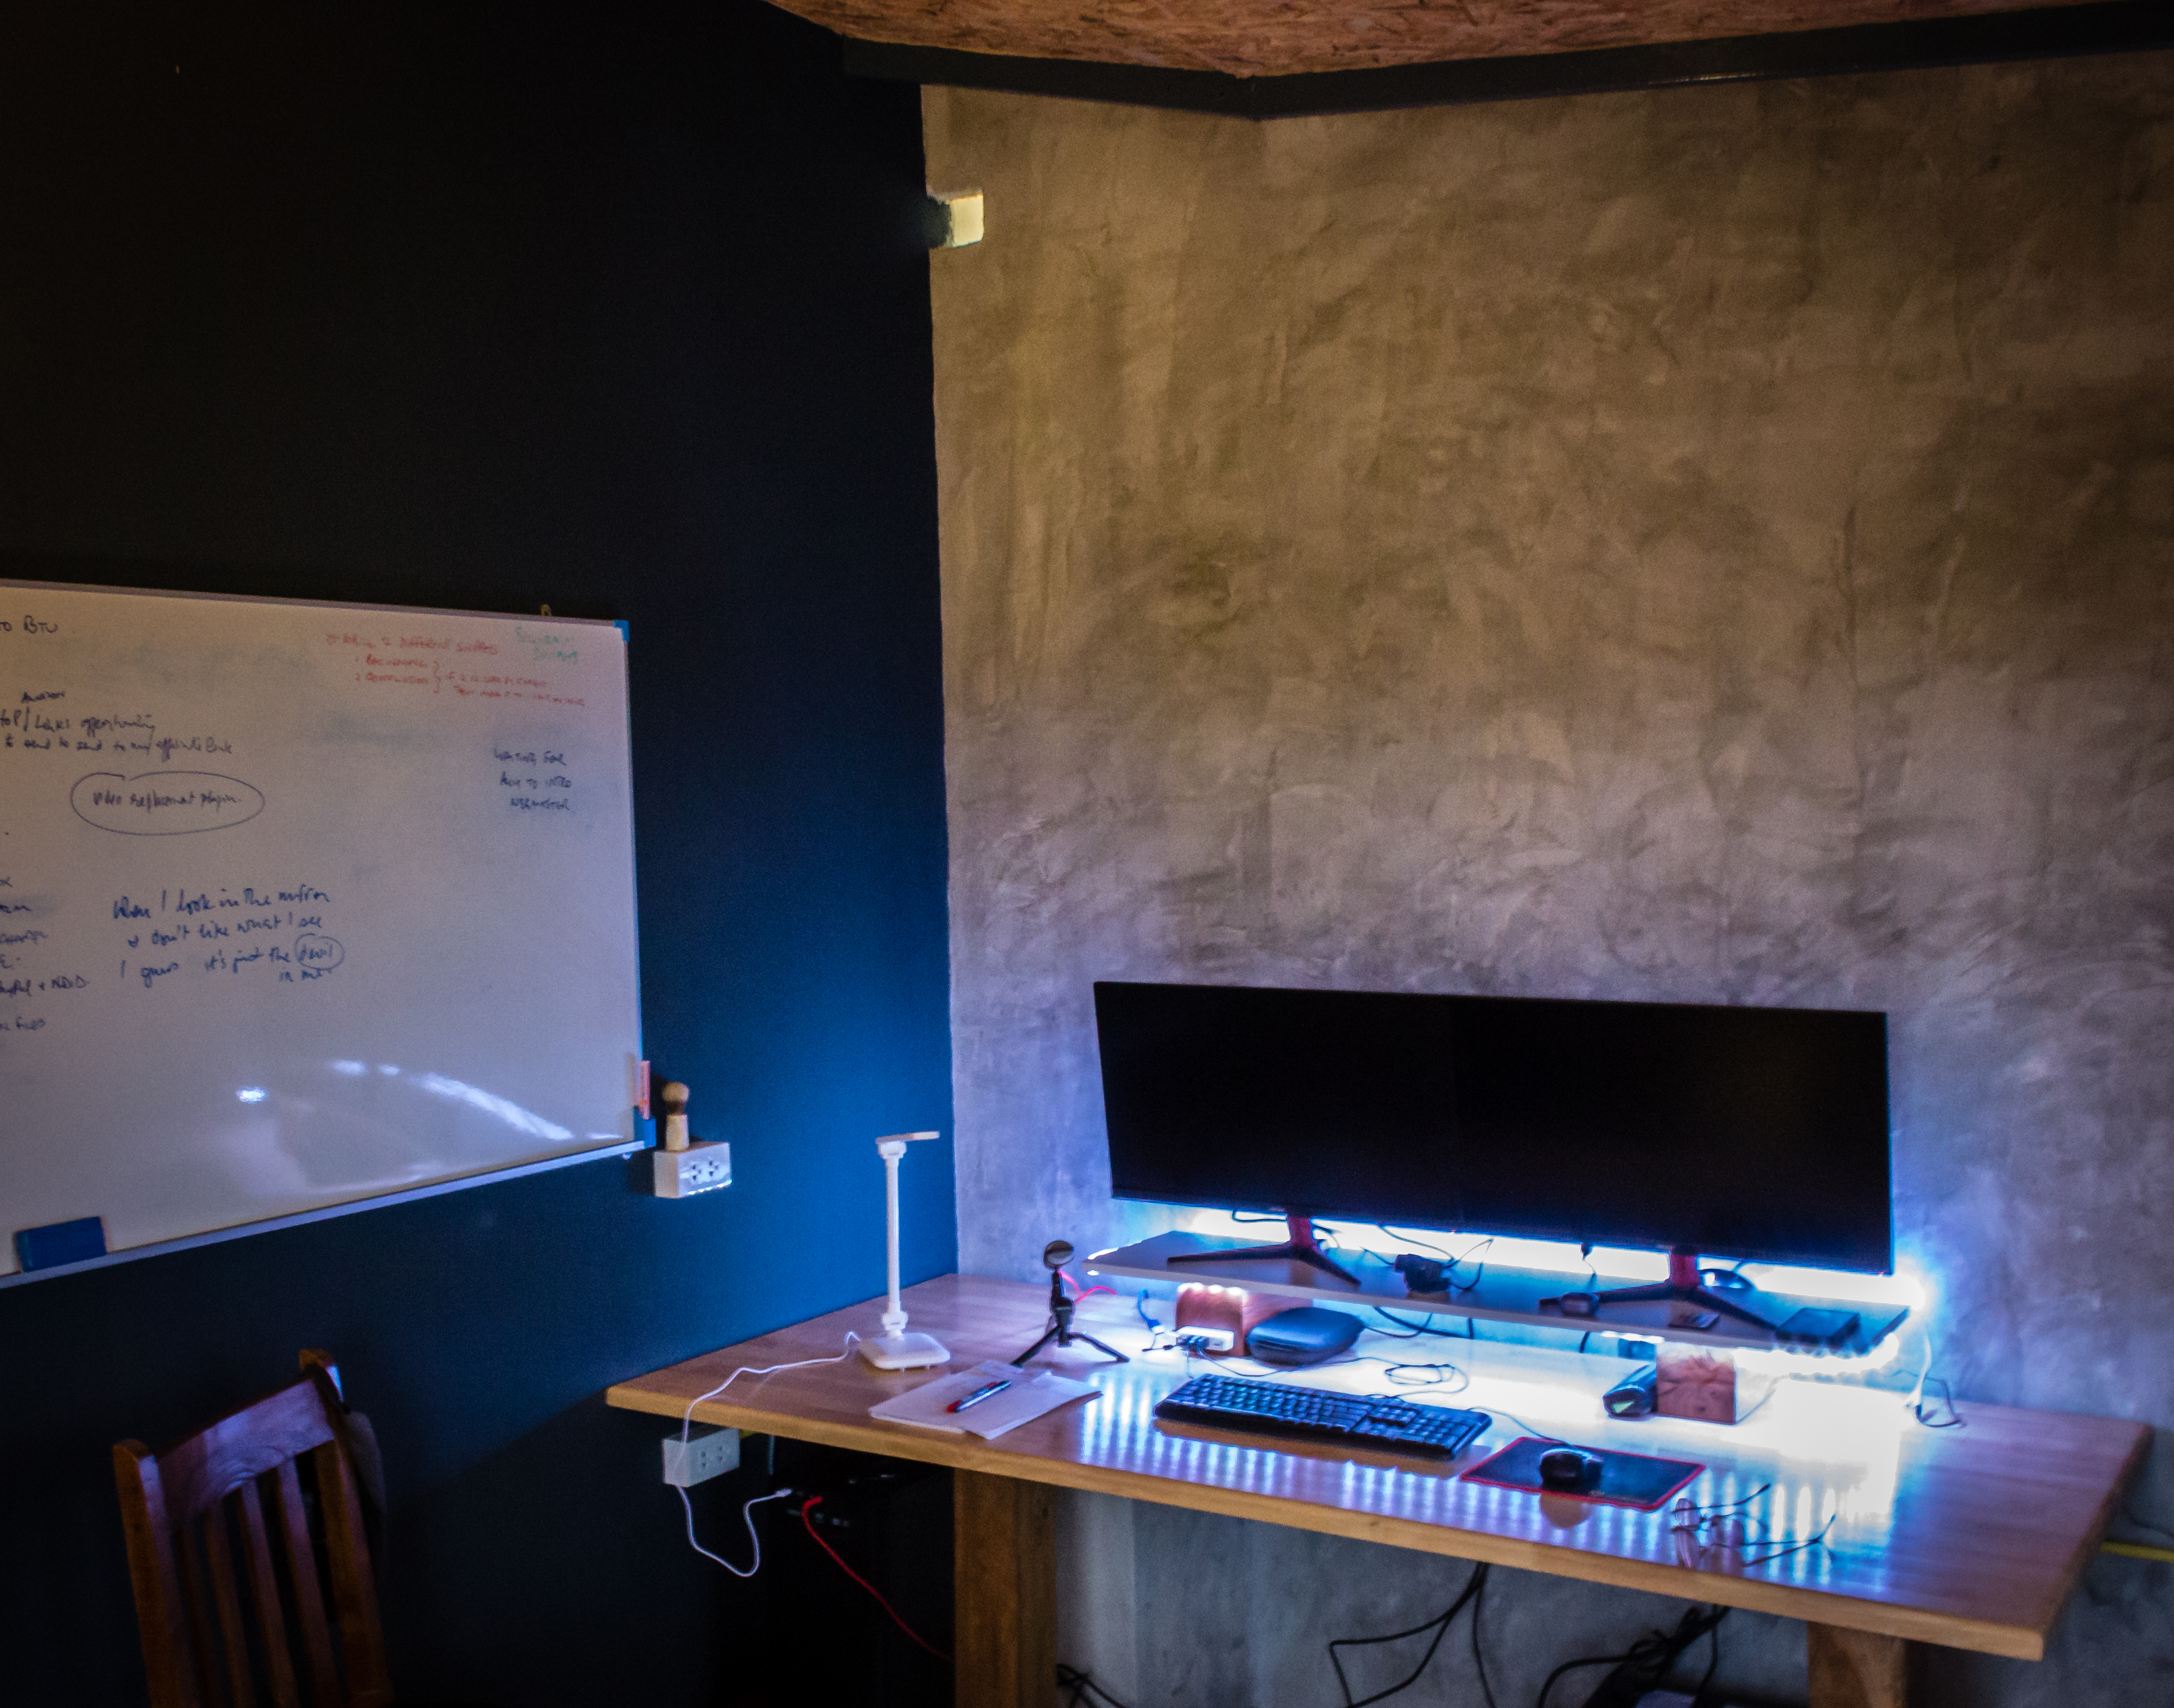 Creative-writing-space-desk-2 monitors-whiteboard